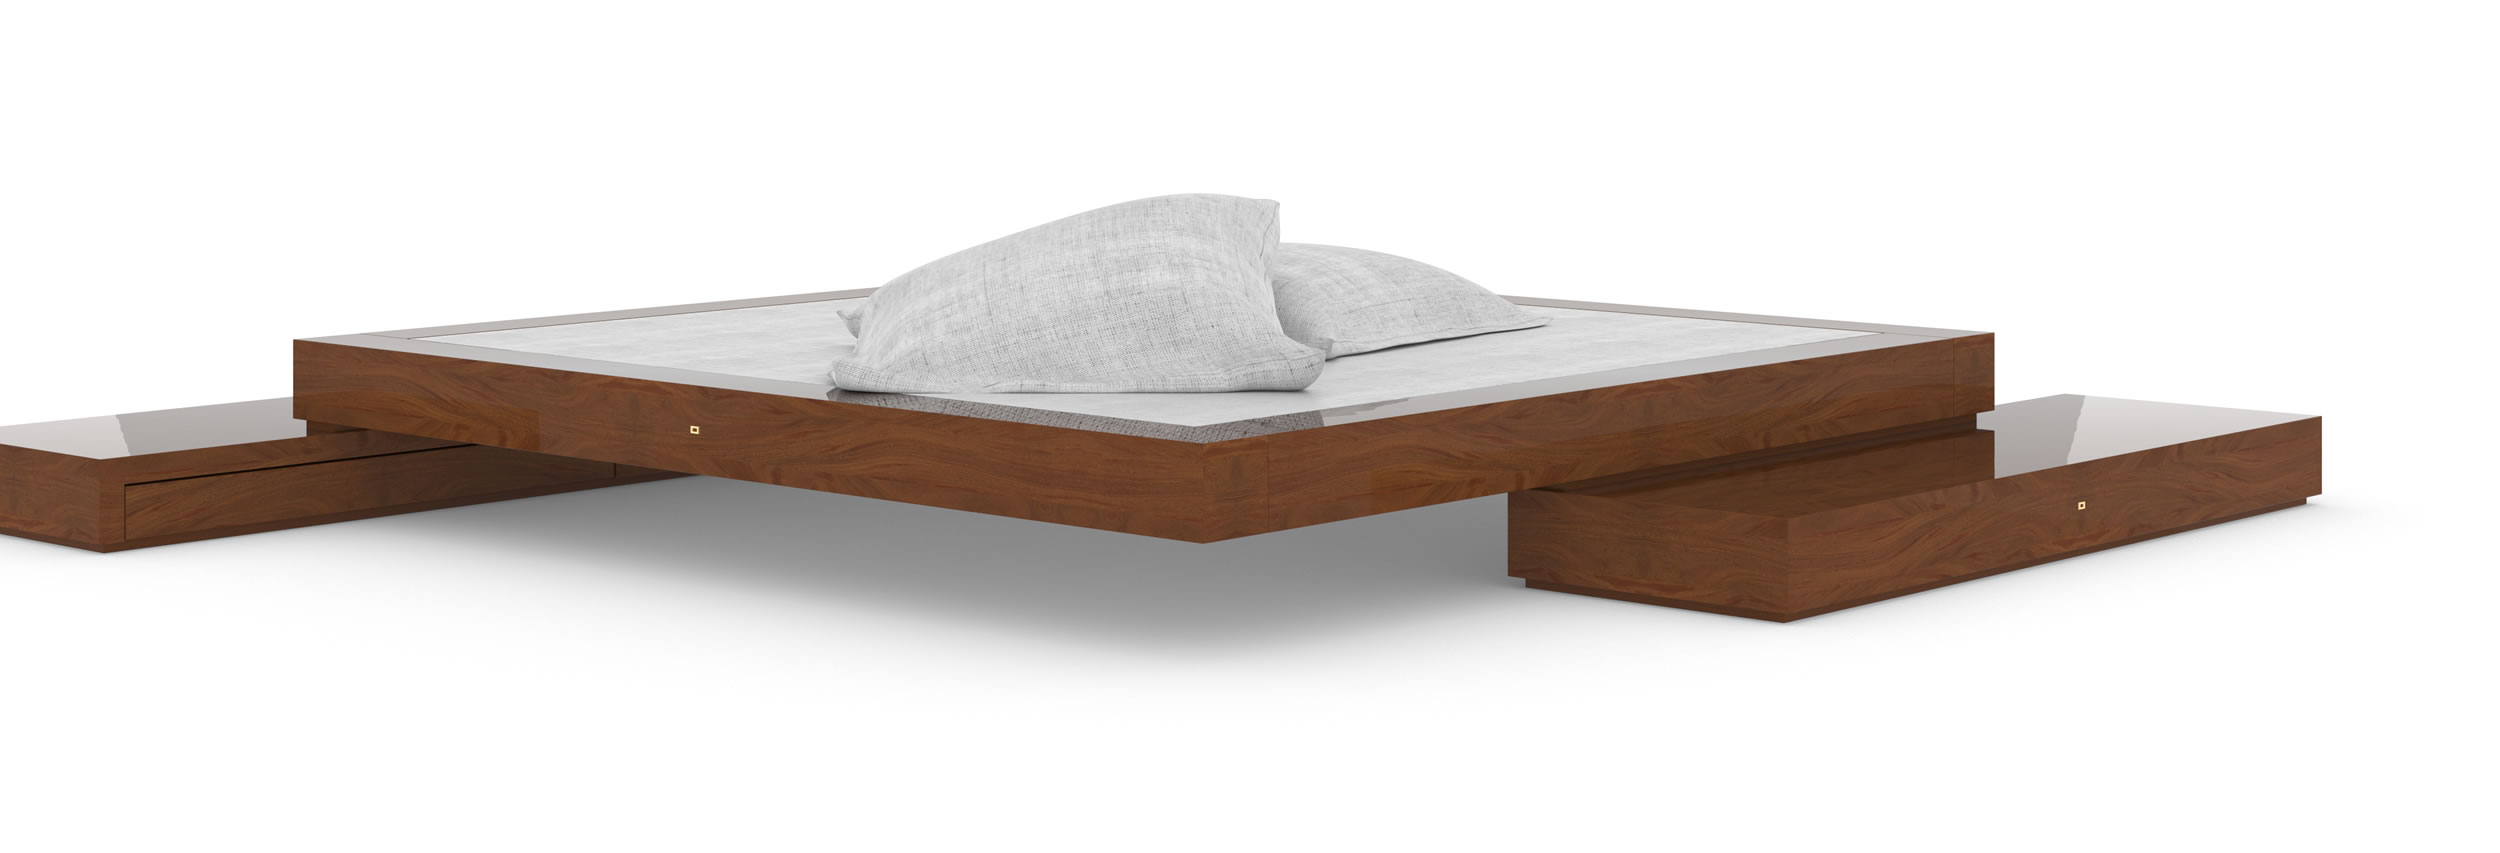 Design Bed Sideboards Refined Mahogany Hardwood Custom Made Elegant Design InteriorFELIX SCHWAKE